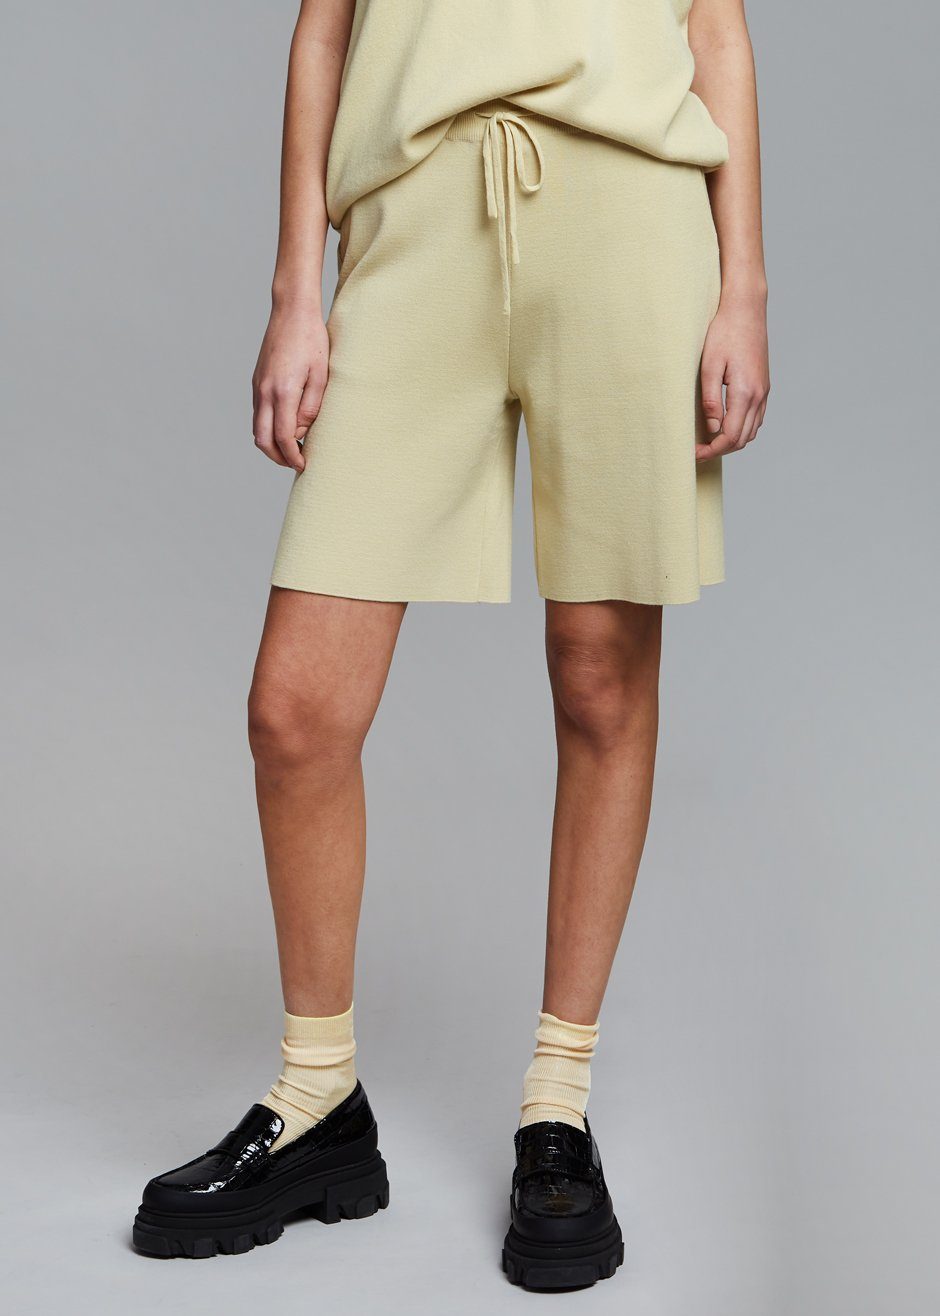 Lila Knit Shorts - Straw - 2